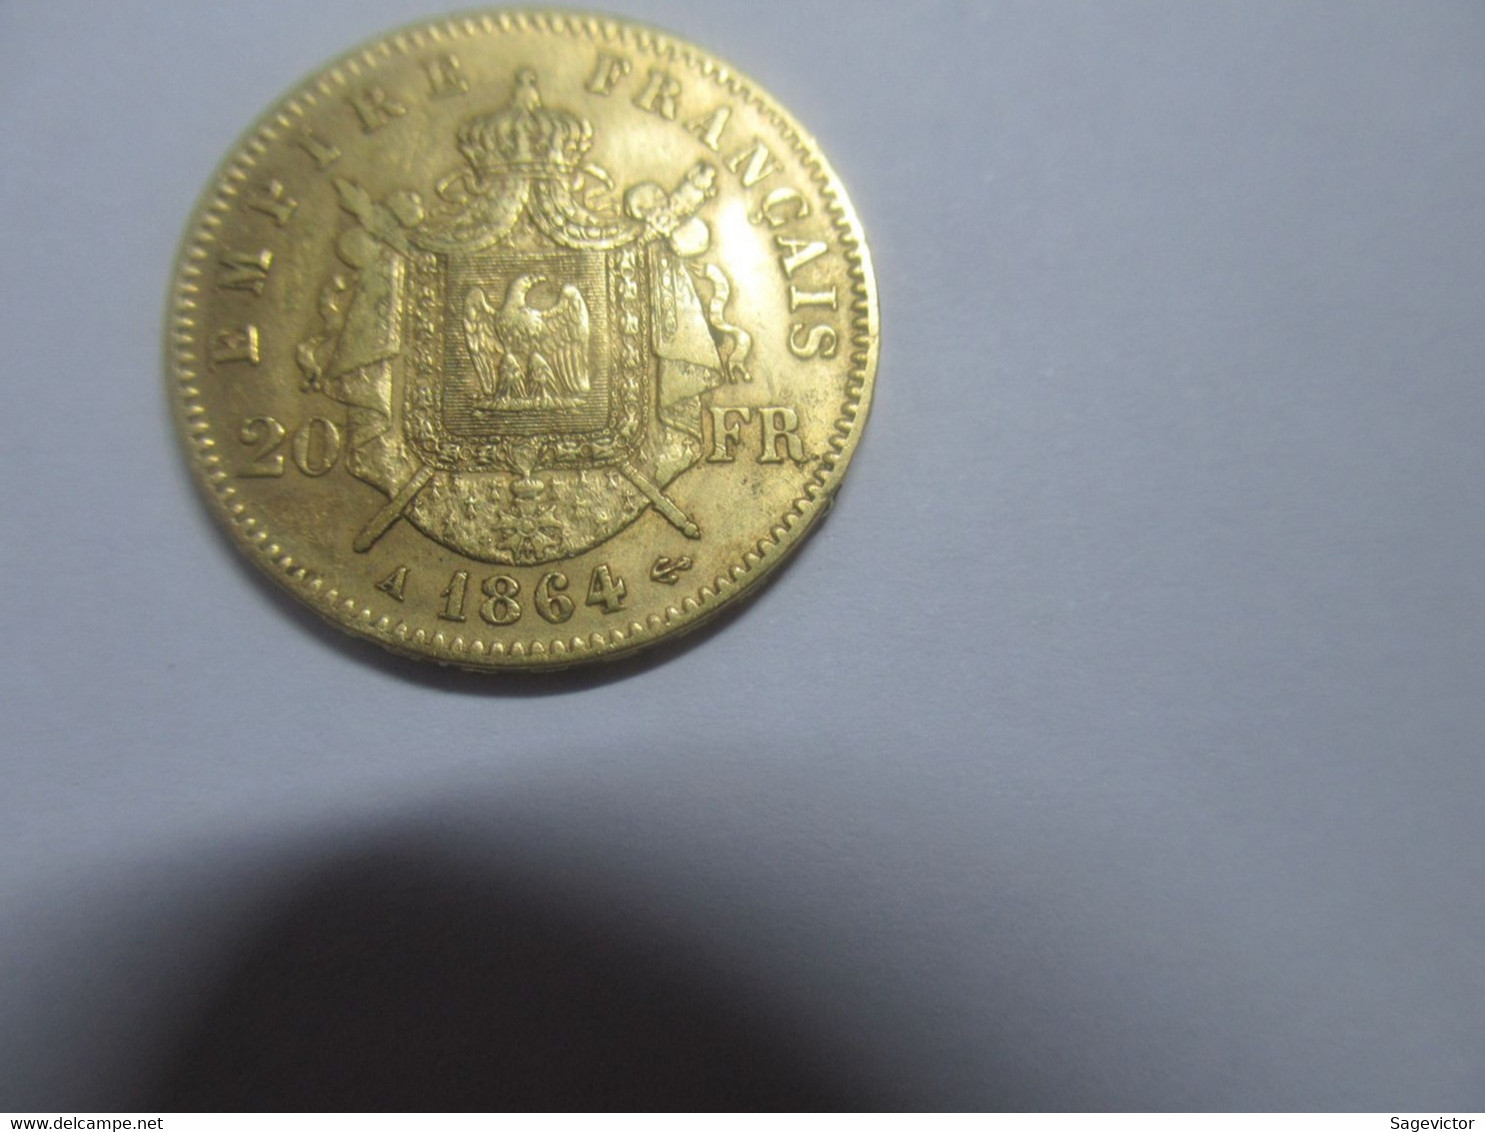 20 Francs Or 1864 A Napoléon III - 20 Francs (gold)